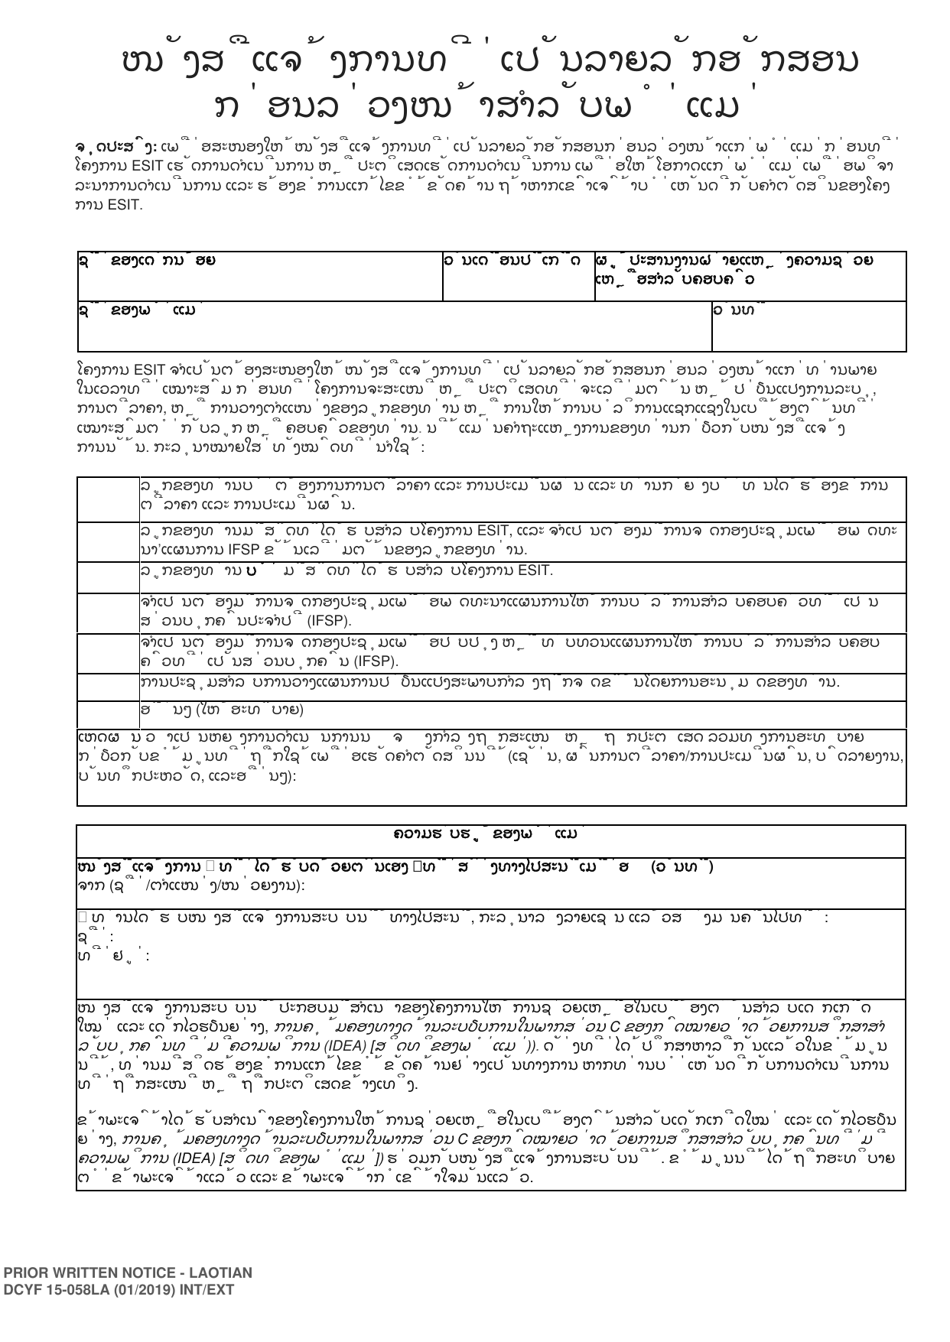 DCYF Form 15-058 Parent Prior Written Notice - Washington (Lao), Page 1